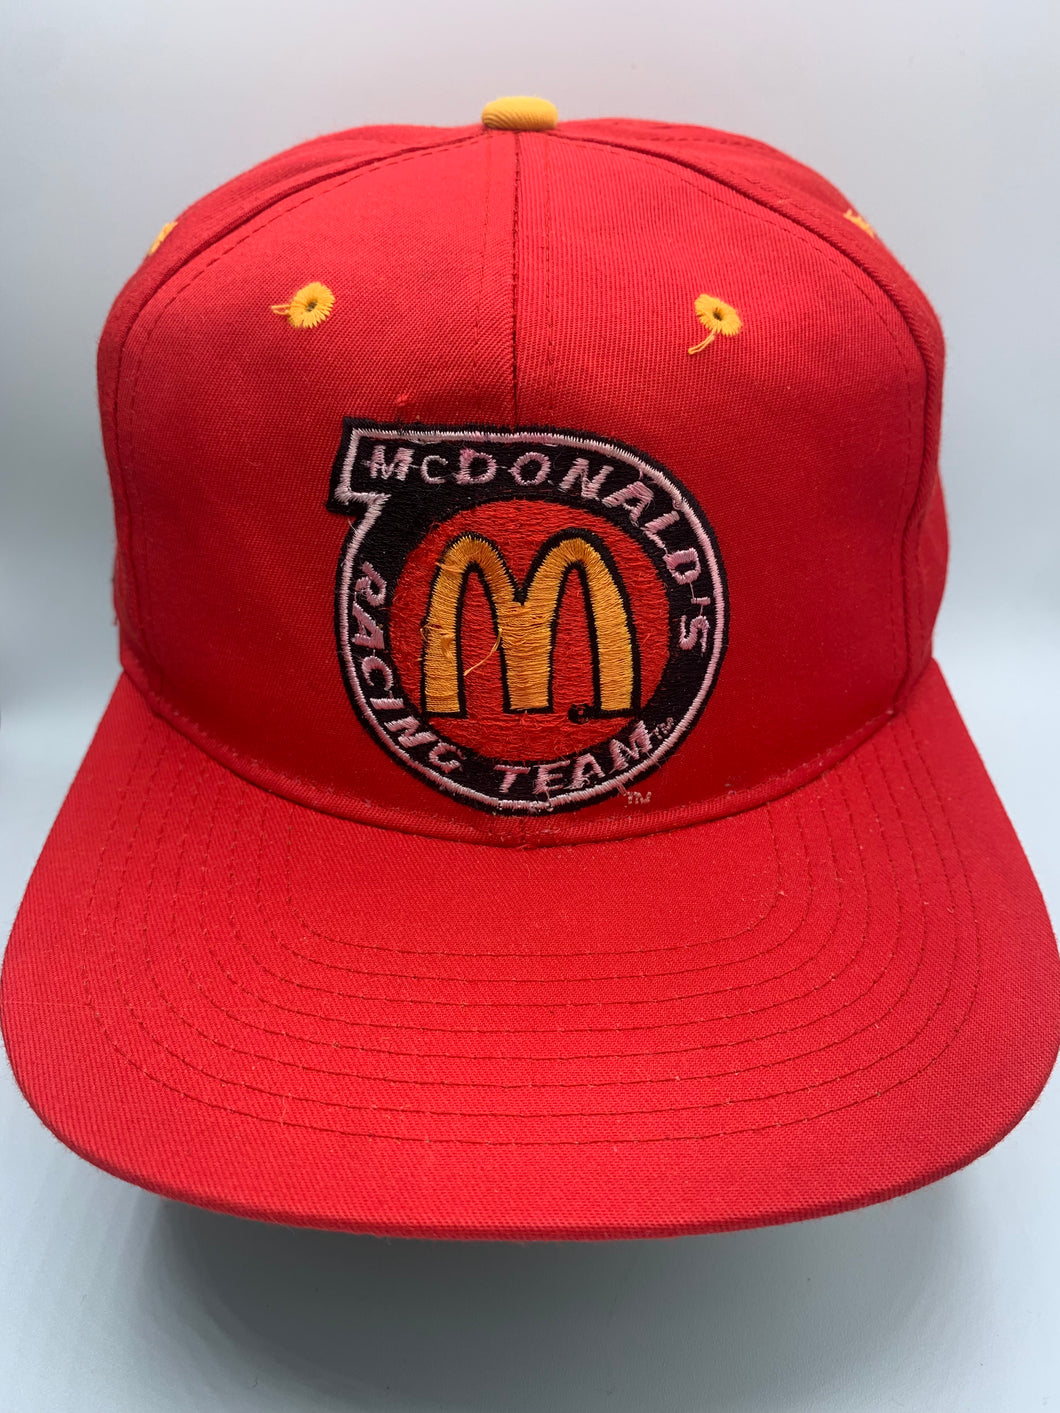 Vintage McDonald’s Nascar Racing Snapback Hat